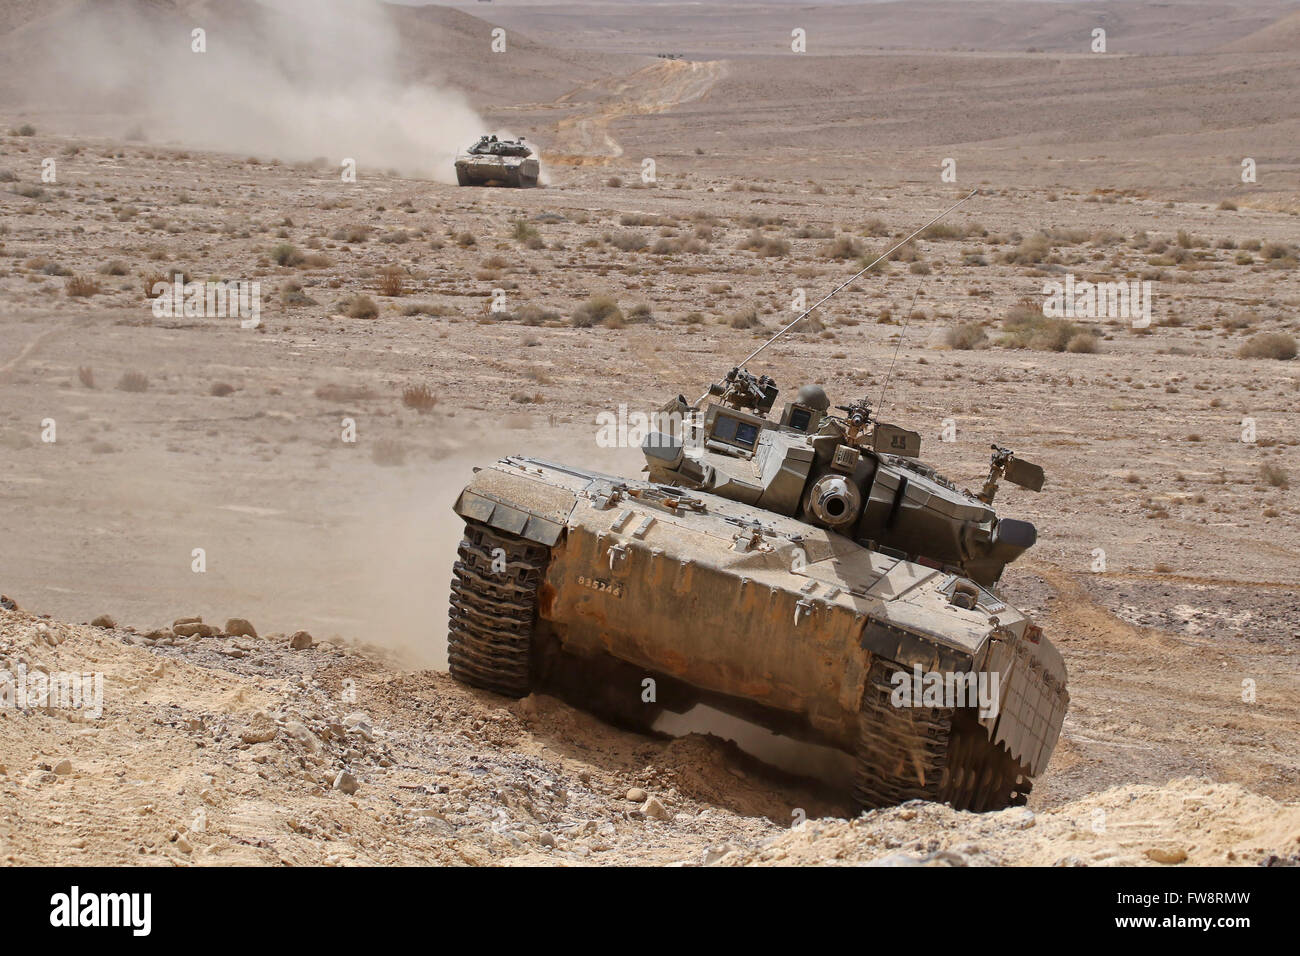 A Merkava III main battle tank in the Negev Desert, Israel. Stock Photo